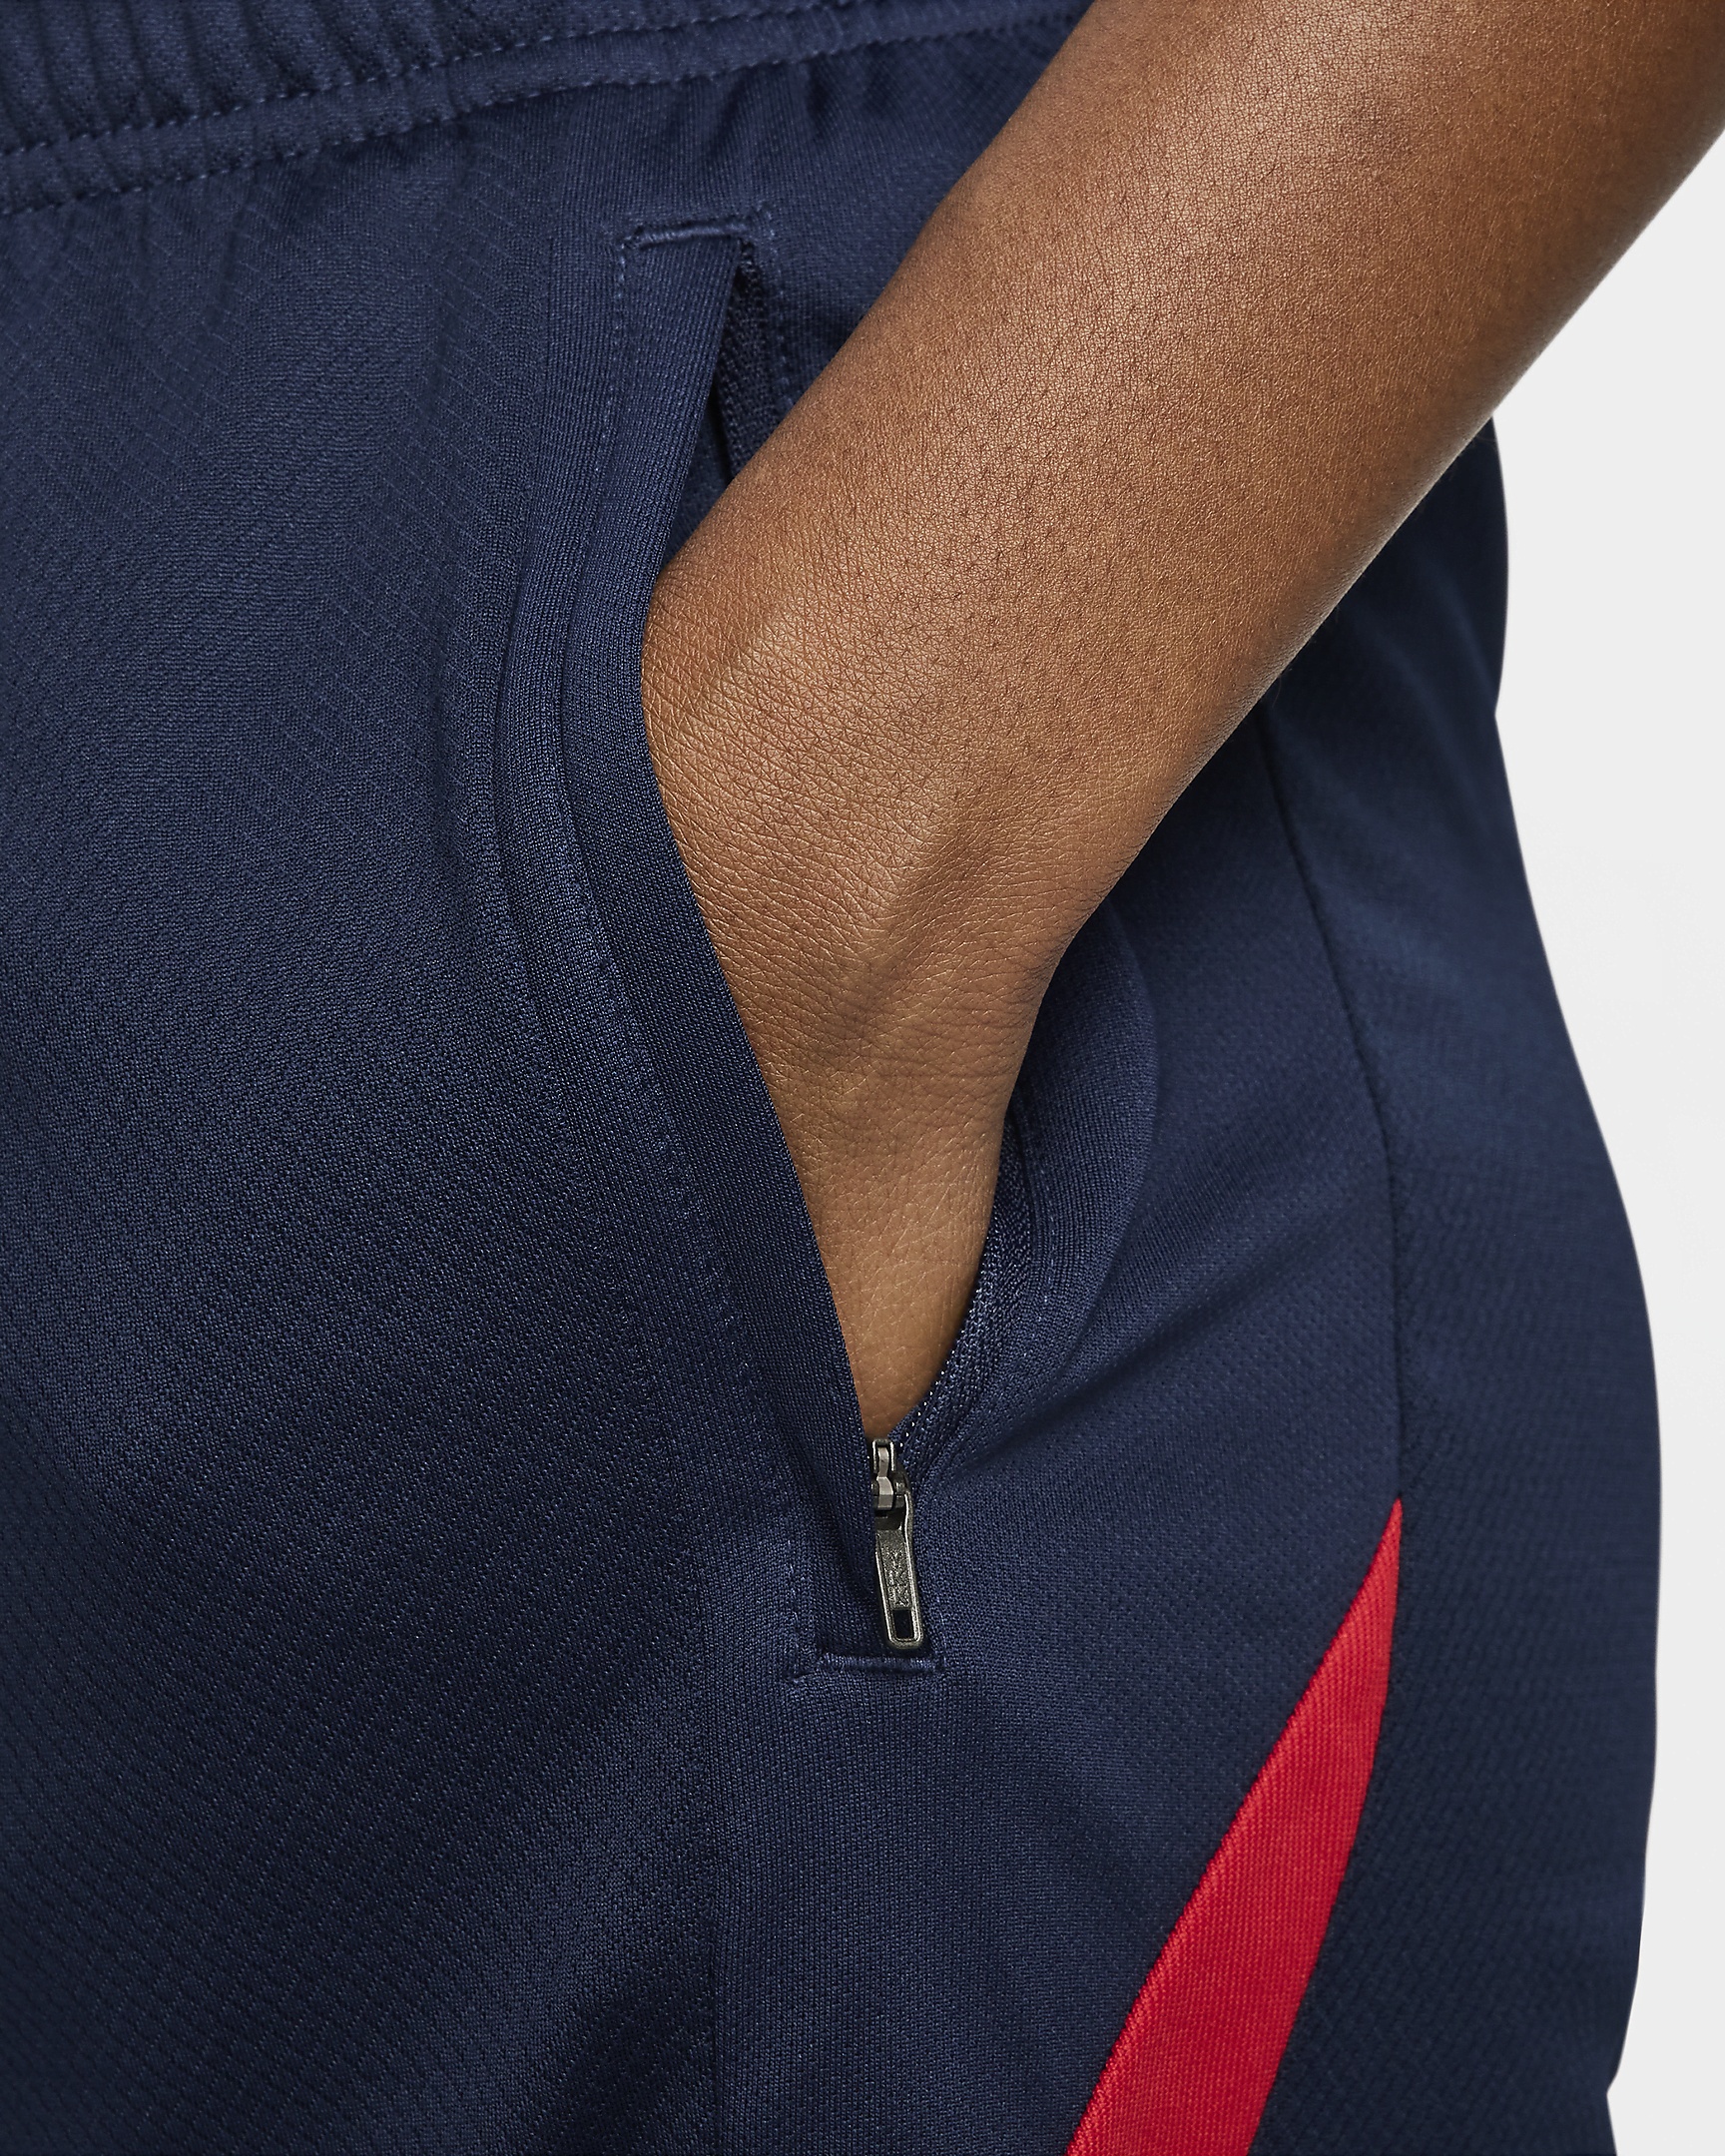 USMNT Strike Nike Women's Dri-FIT Soccer Knit Shorts - 5